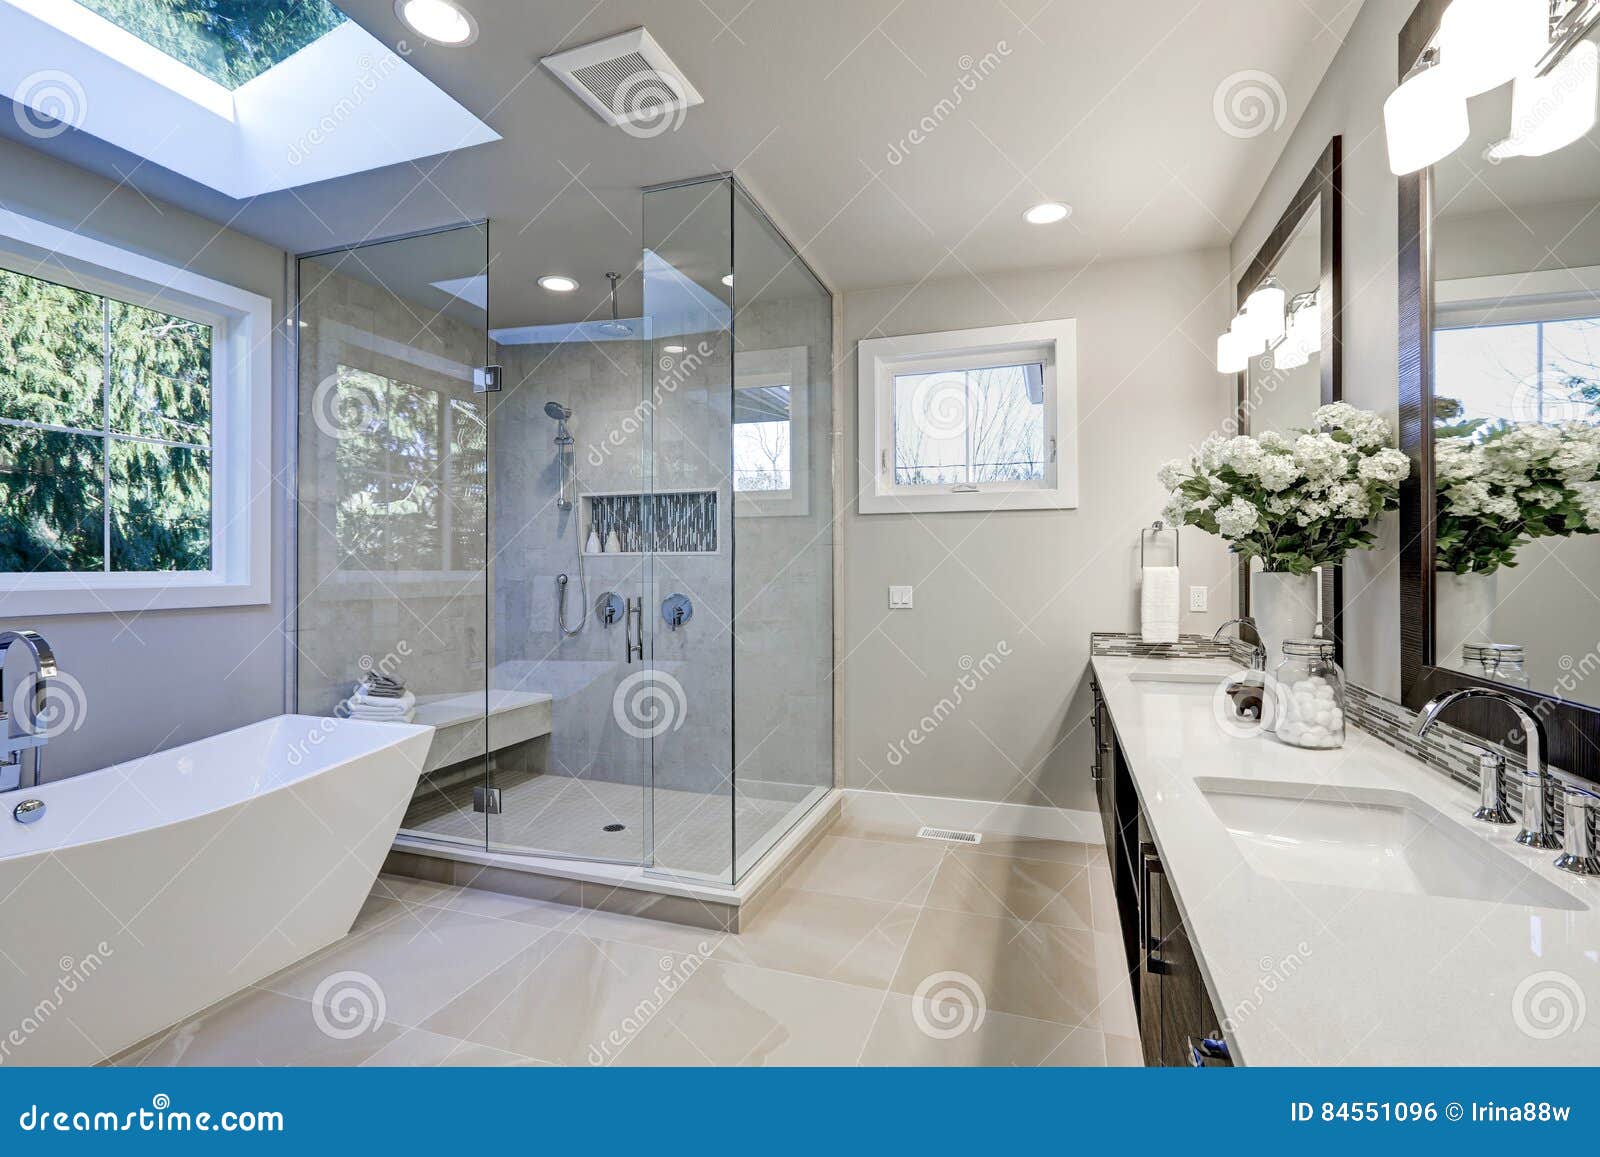 spacious bathroom in gray tones with heated floors